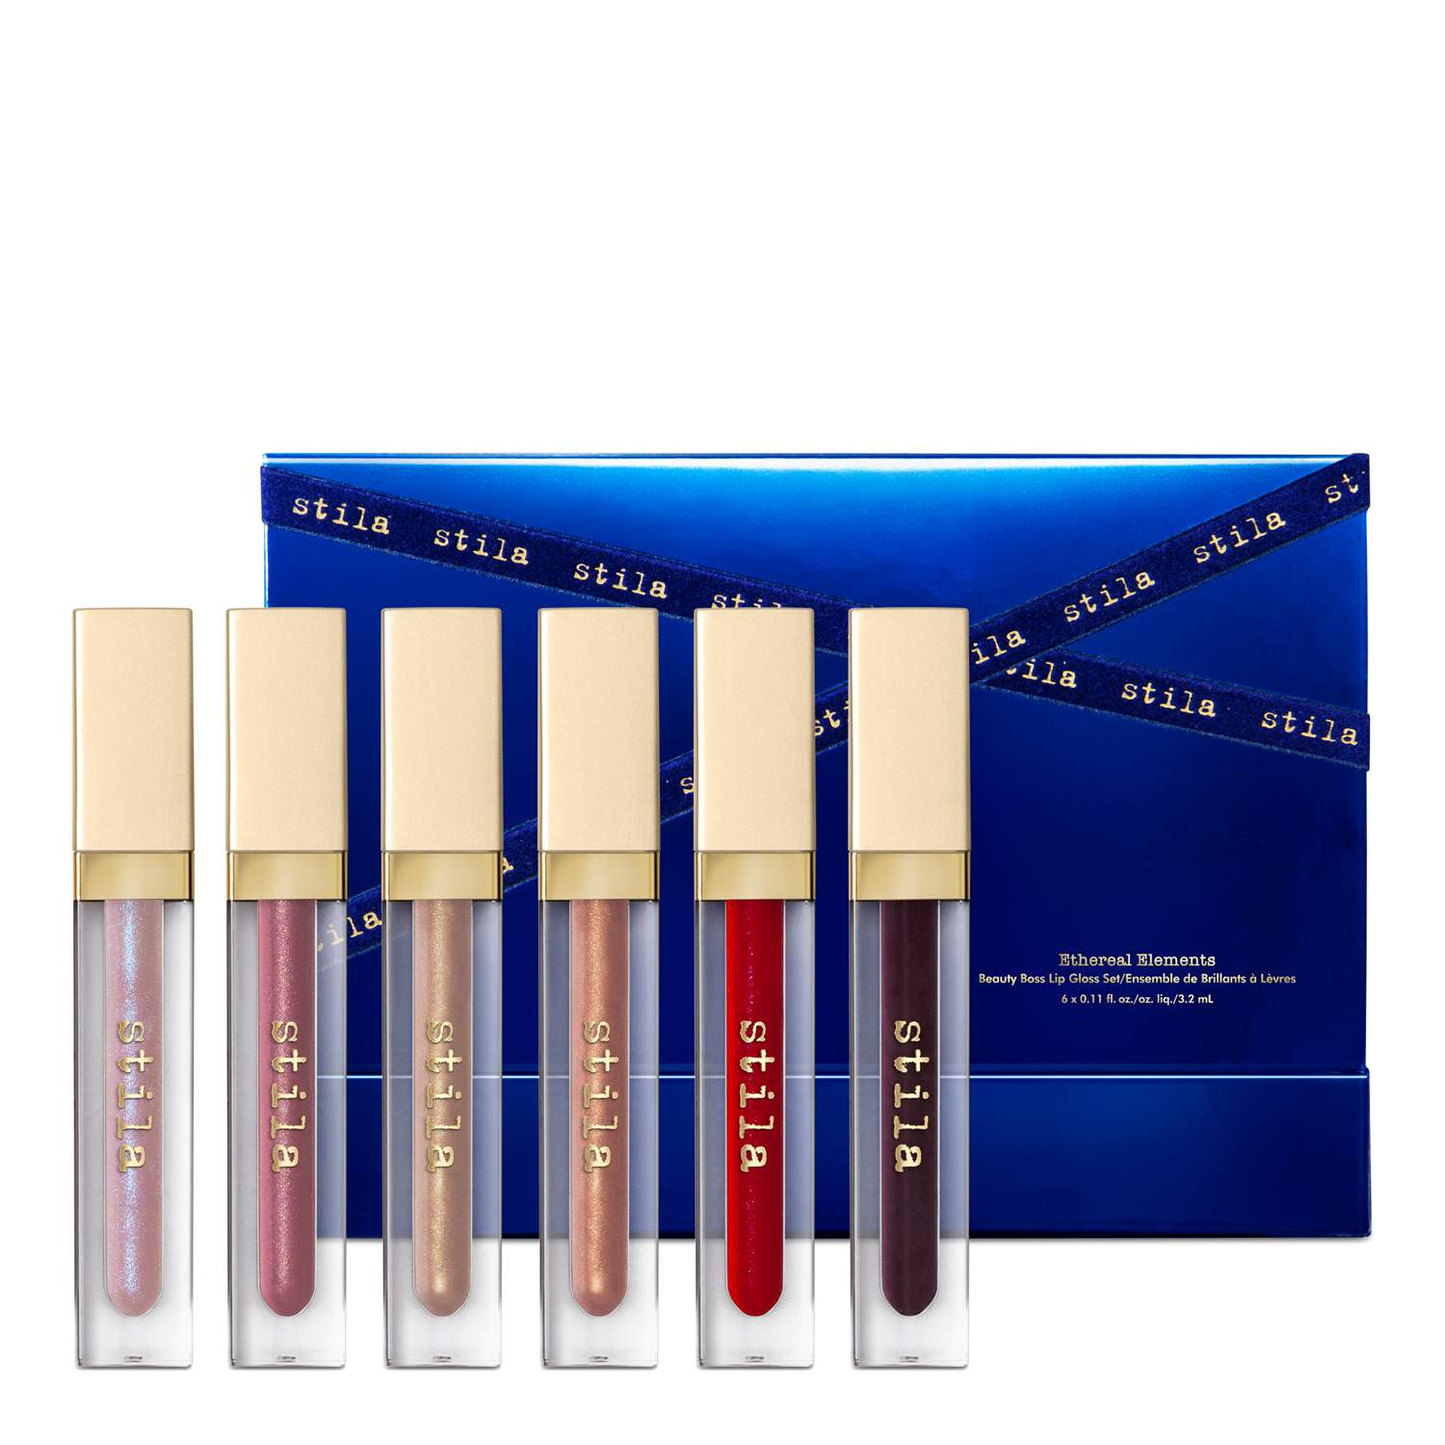 Stila Ethereal Elements Beauty Boss Lip Gloss Set